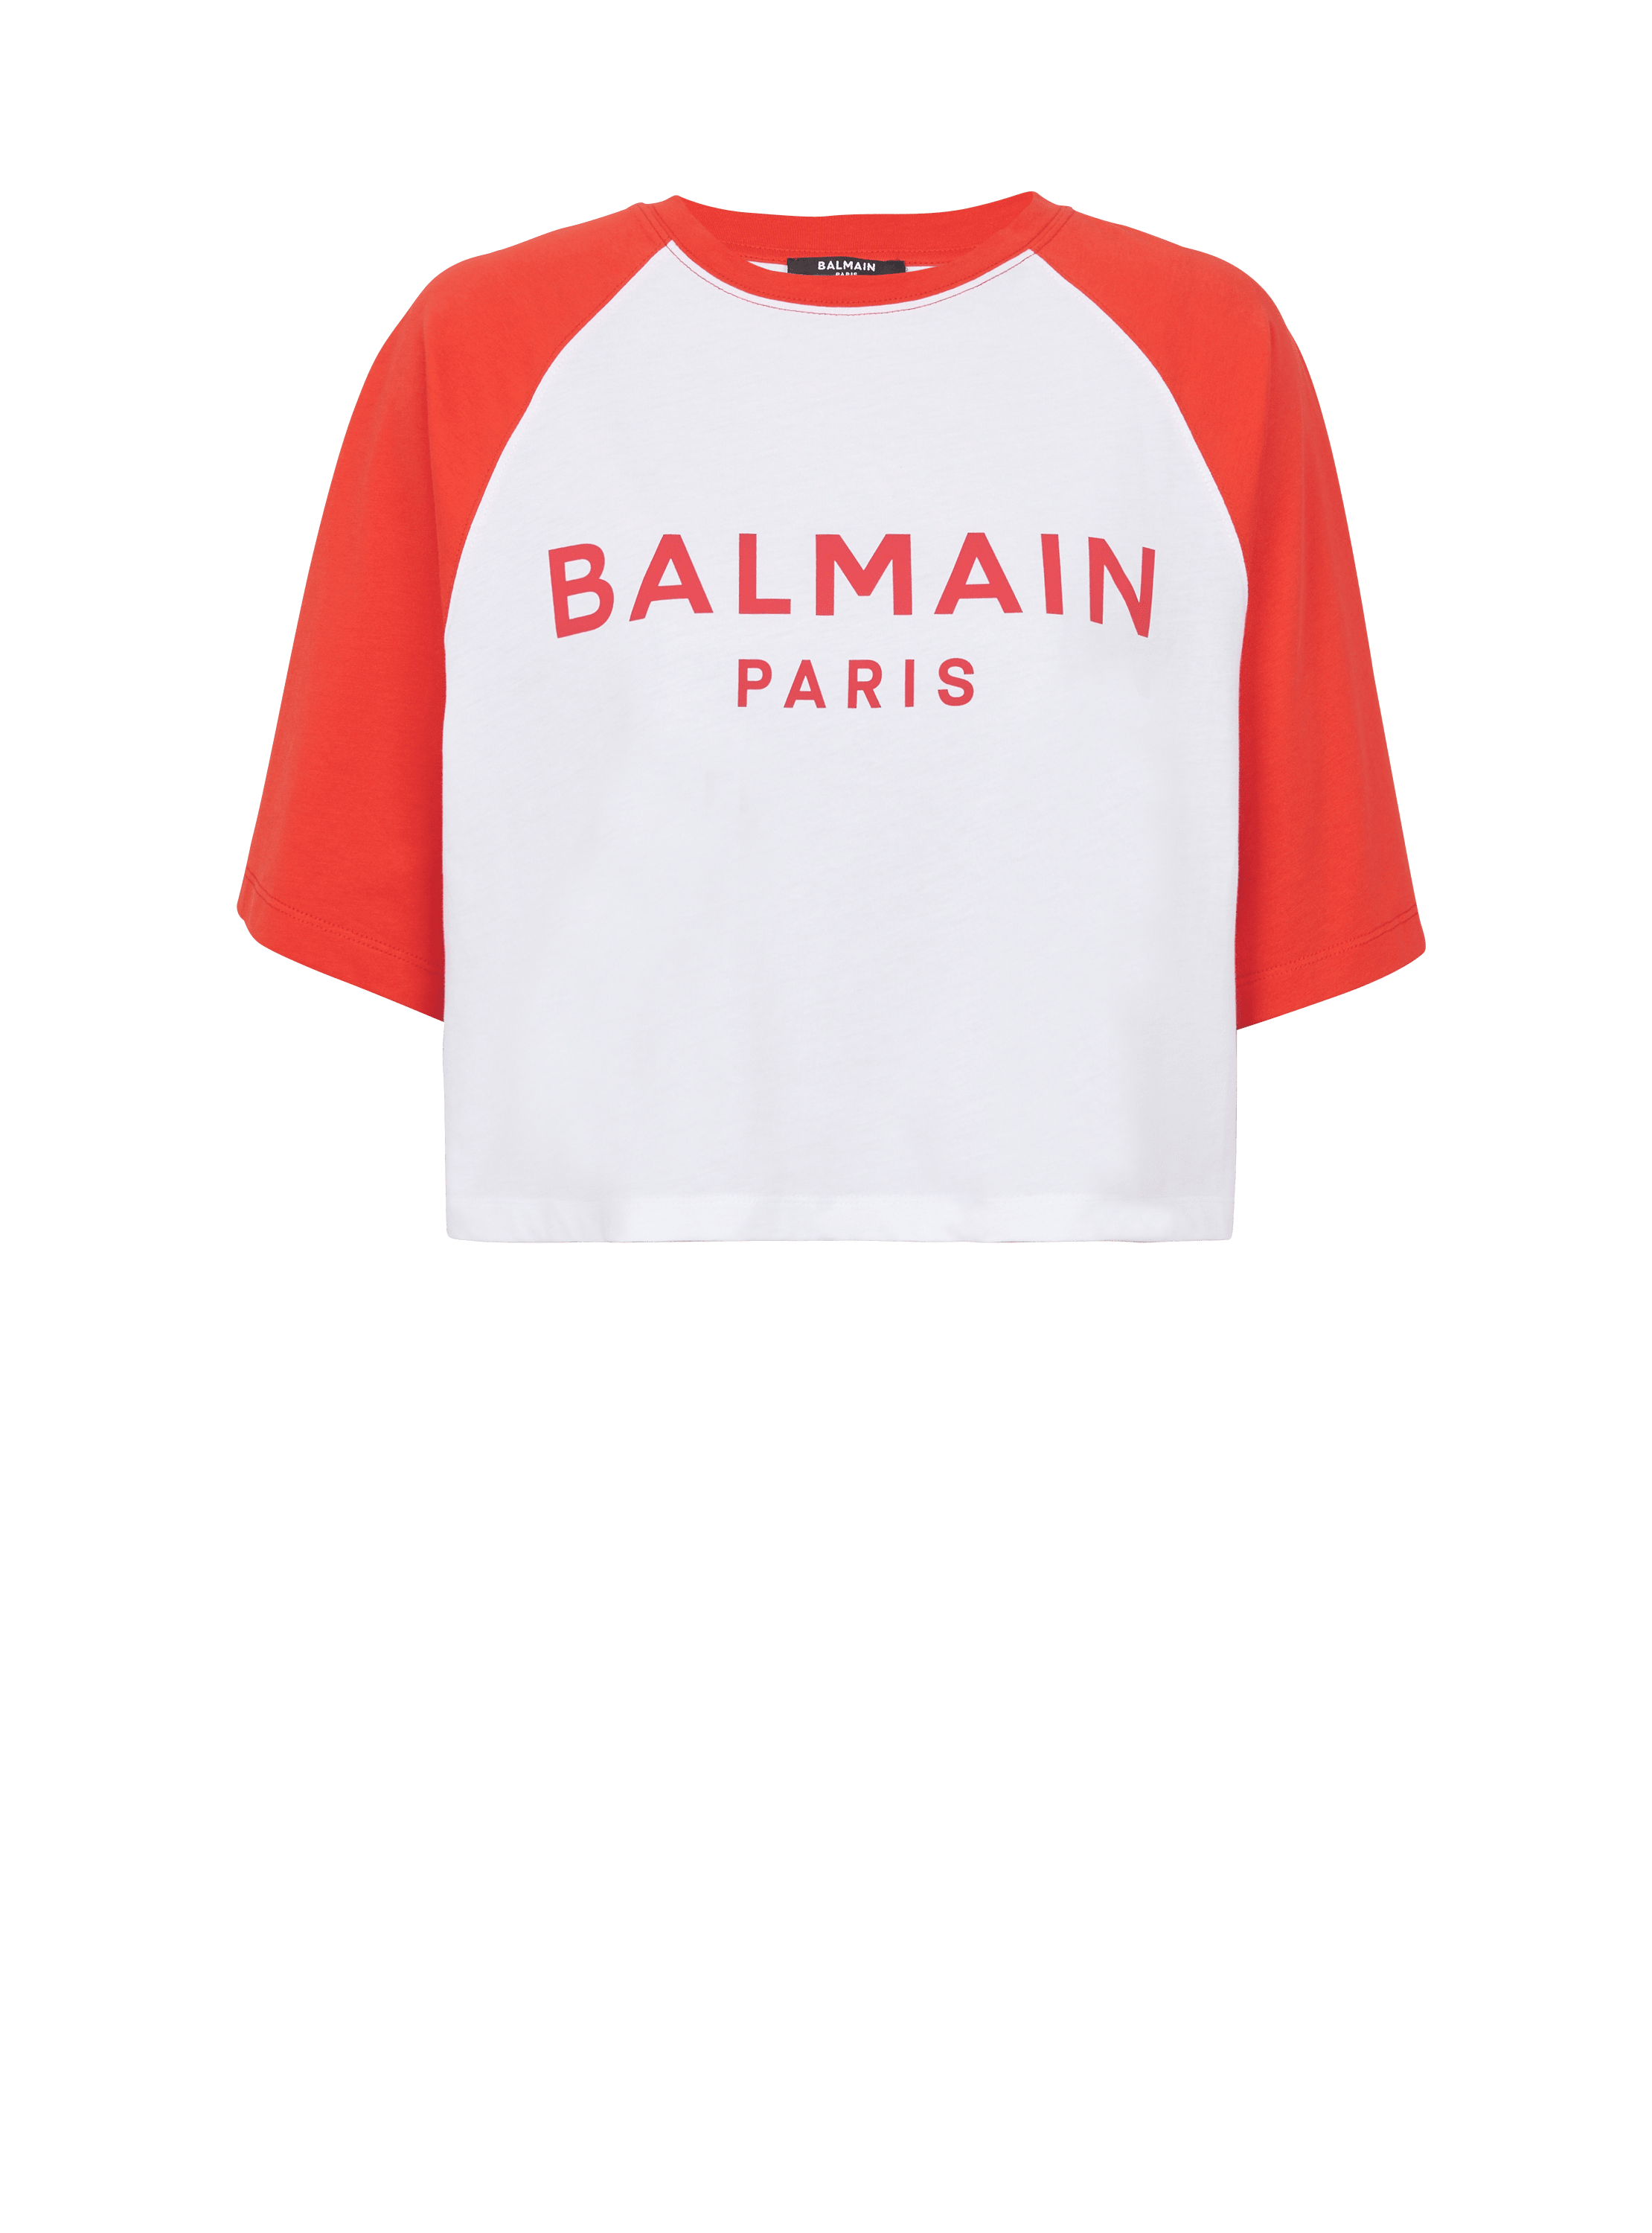 Balmain Paris T-shirt, red, hi-res